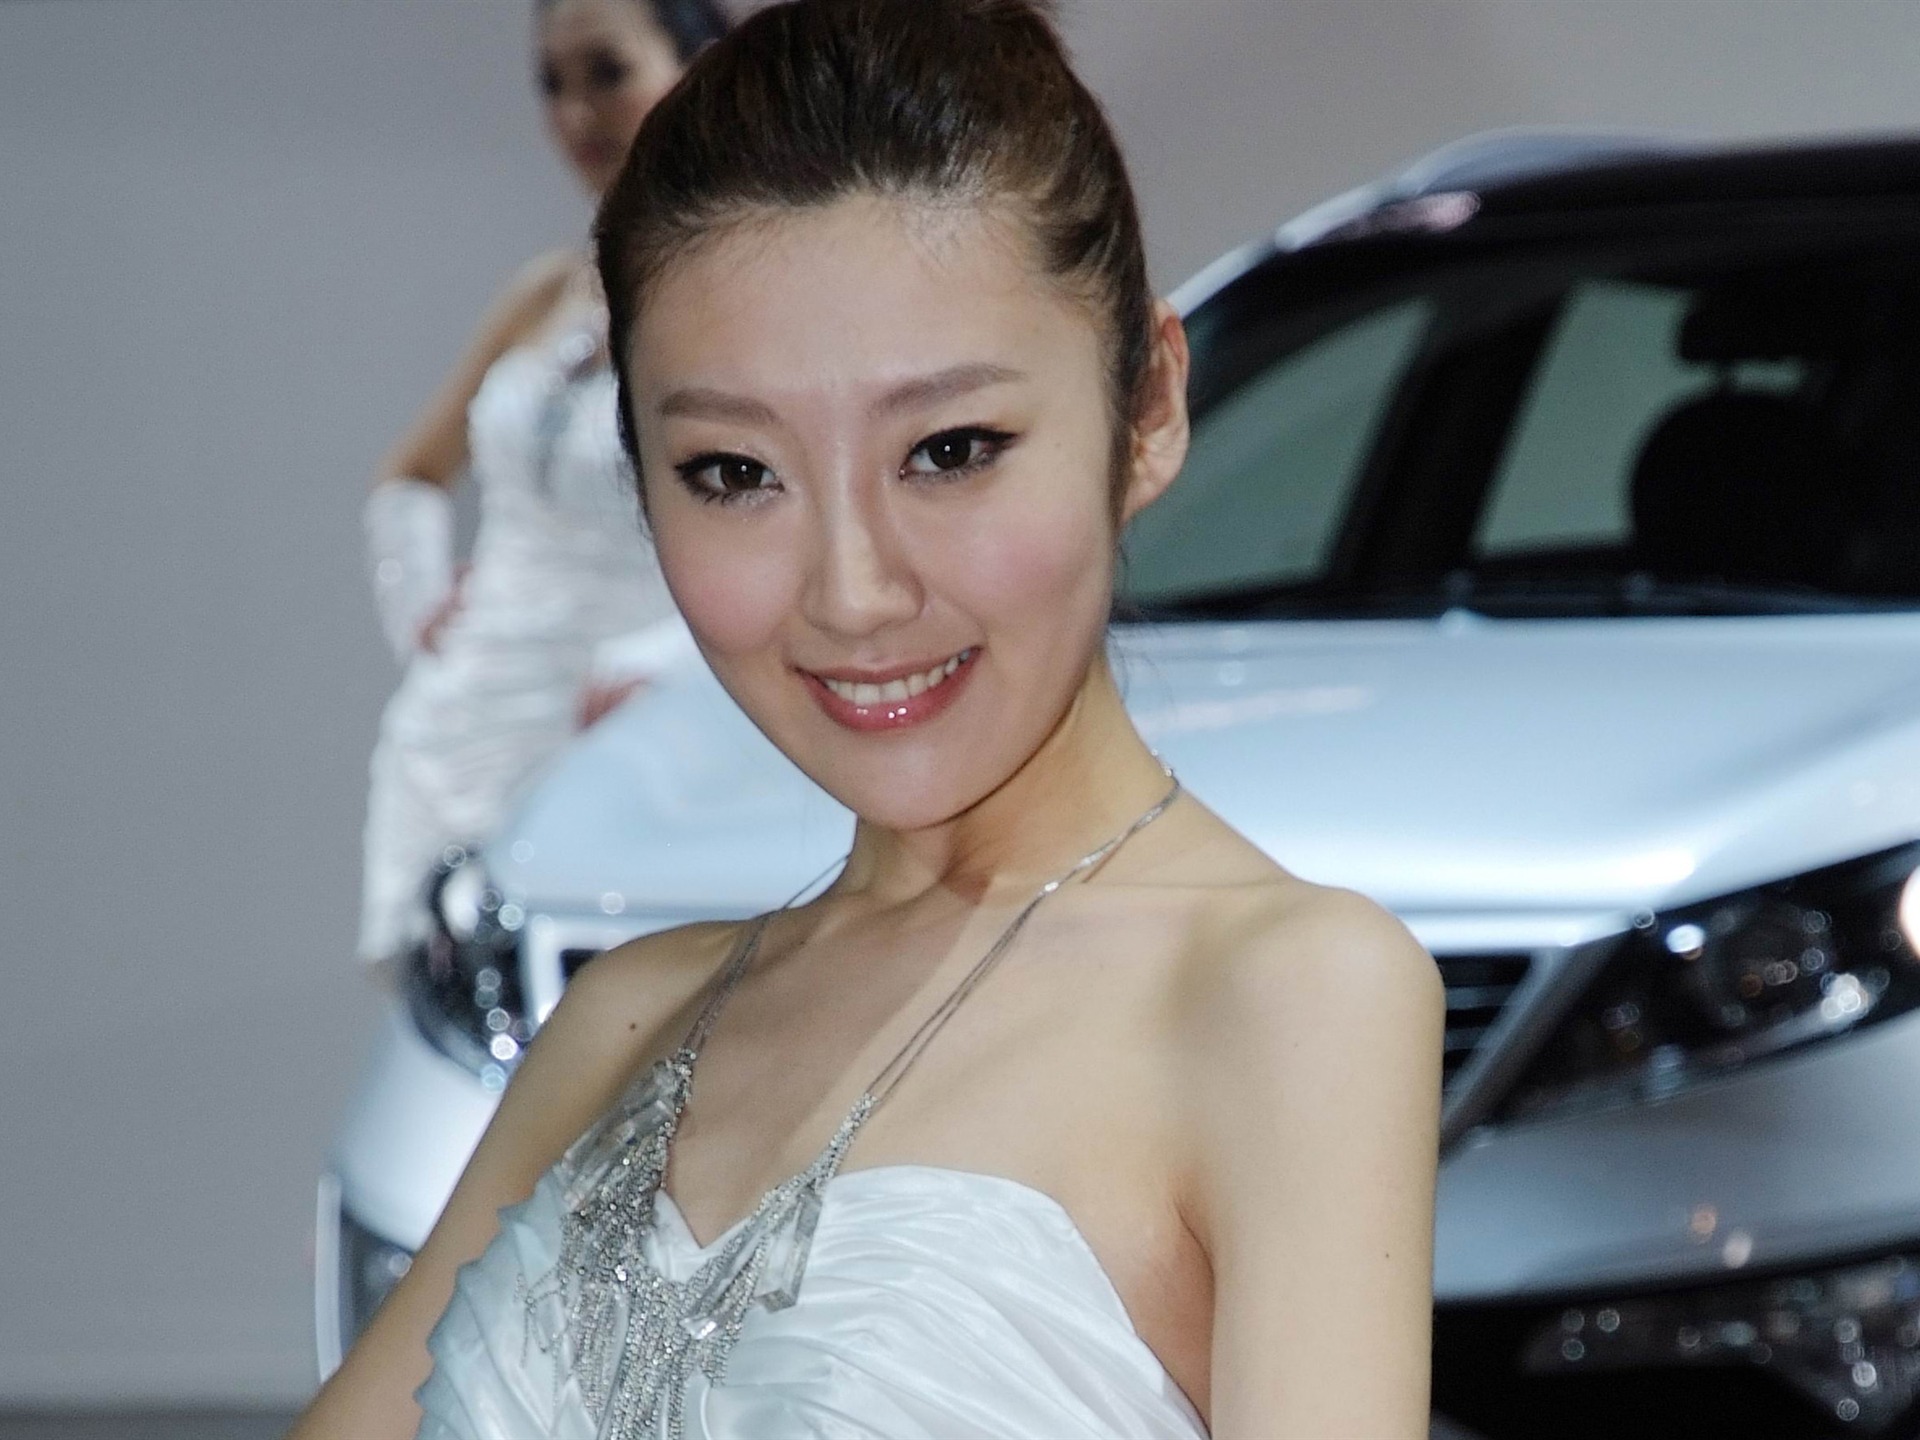 2010 Beijing Auto Show Internacional de belleza (obras barras) #21 - 1920x1440